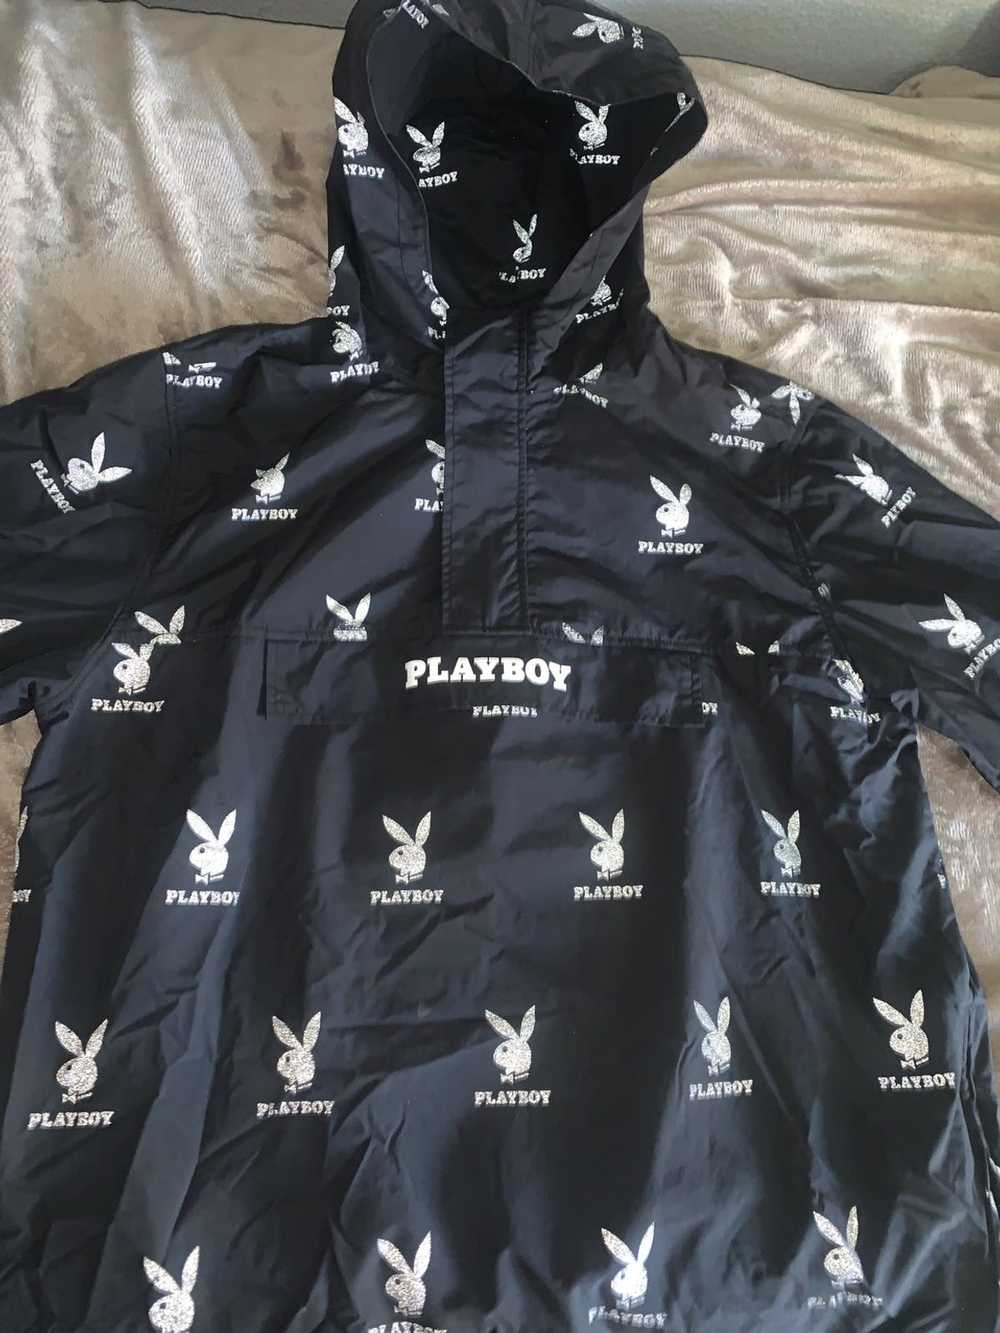 Playboy Black Playboy Reflective Jacket - image 1